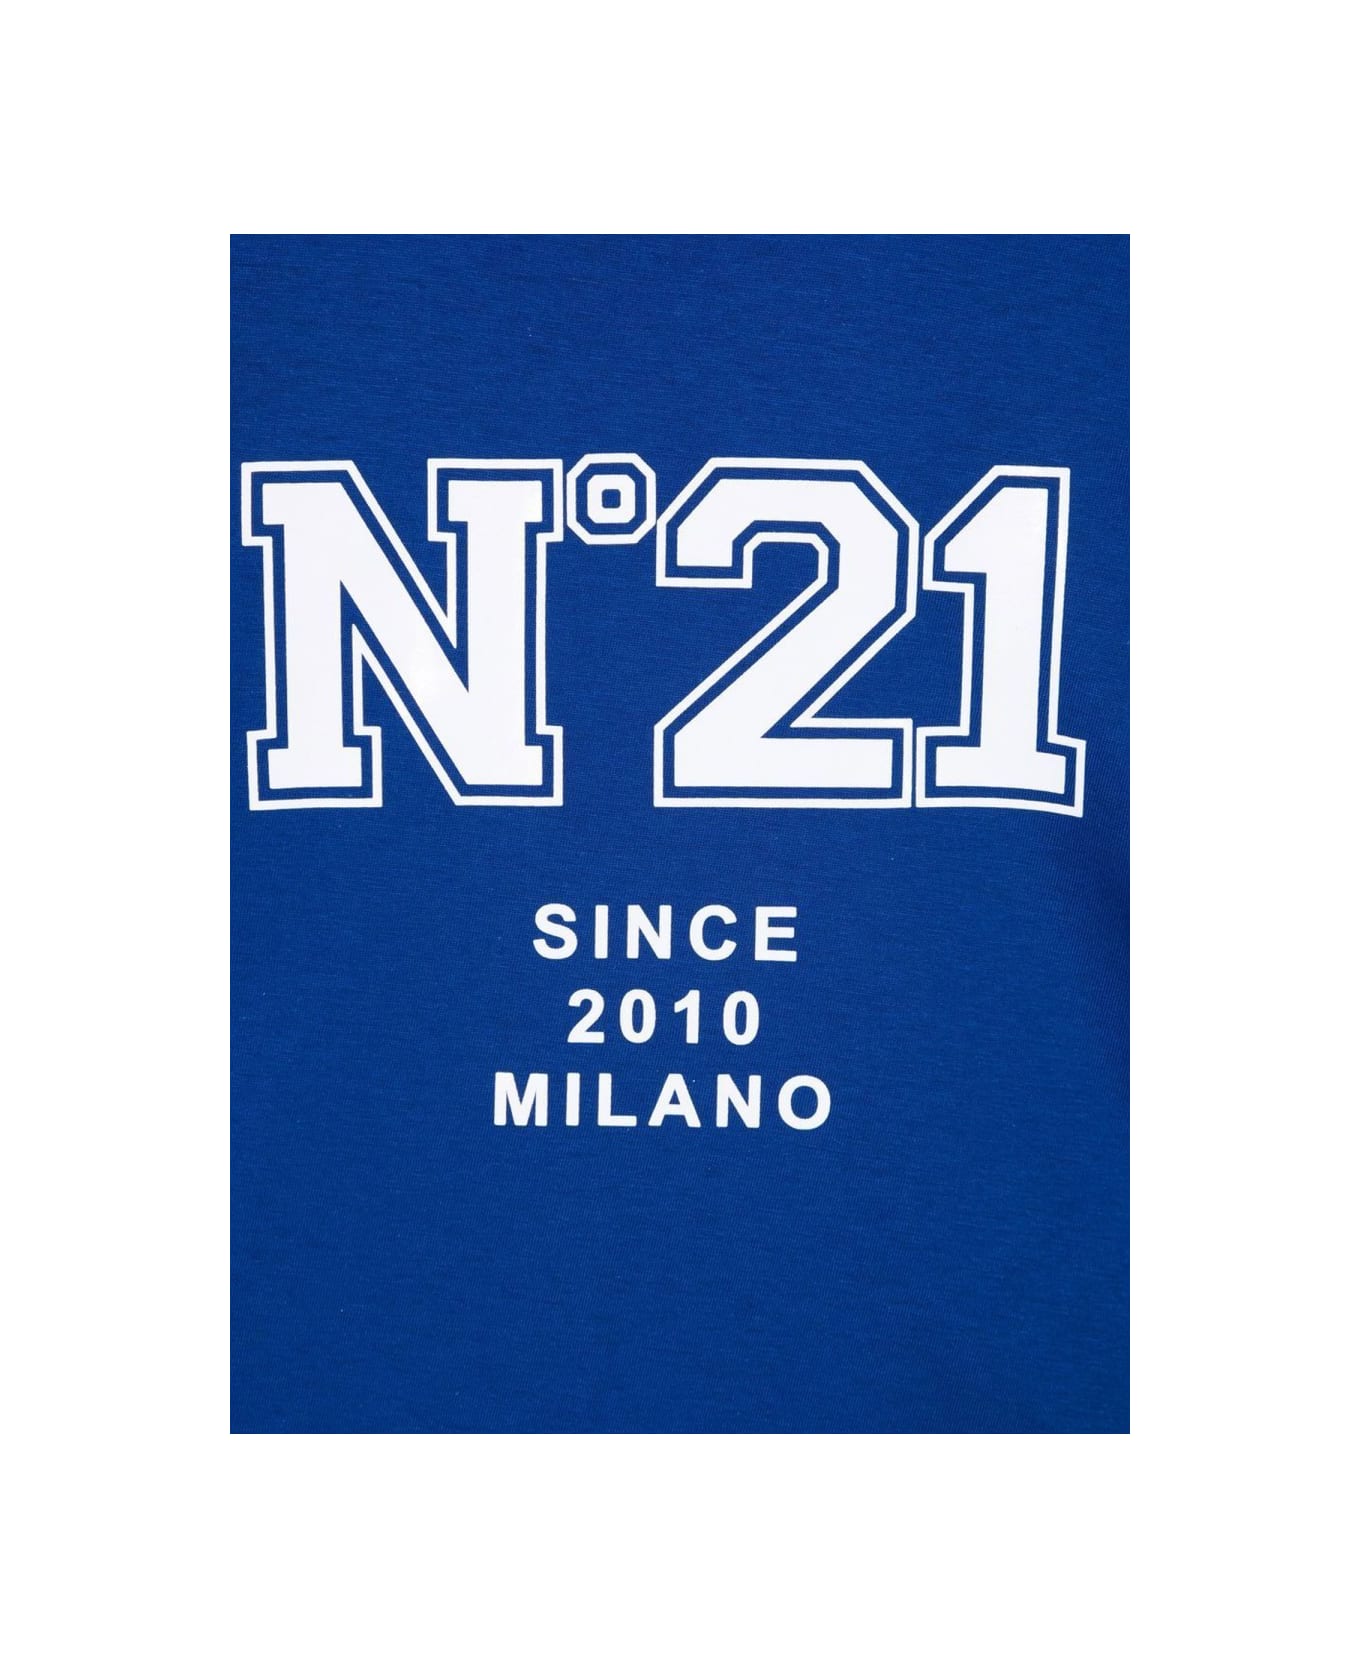 N.21 T-shirt Logo - BLUE